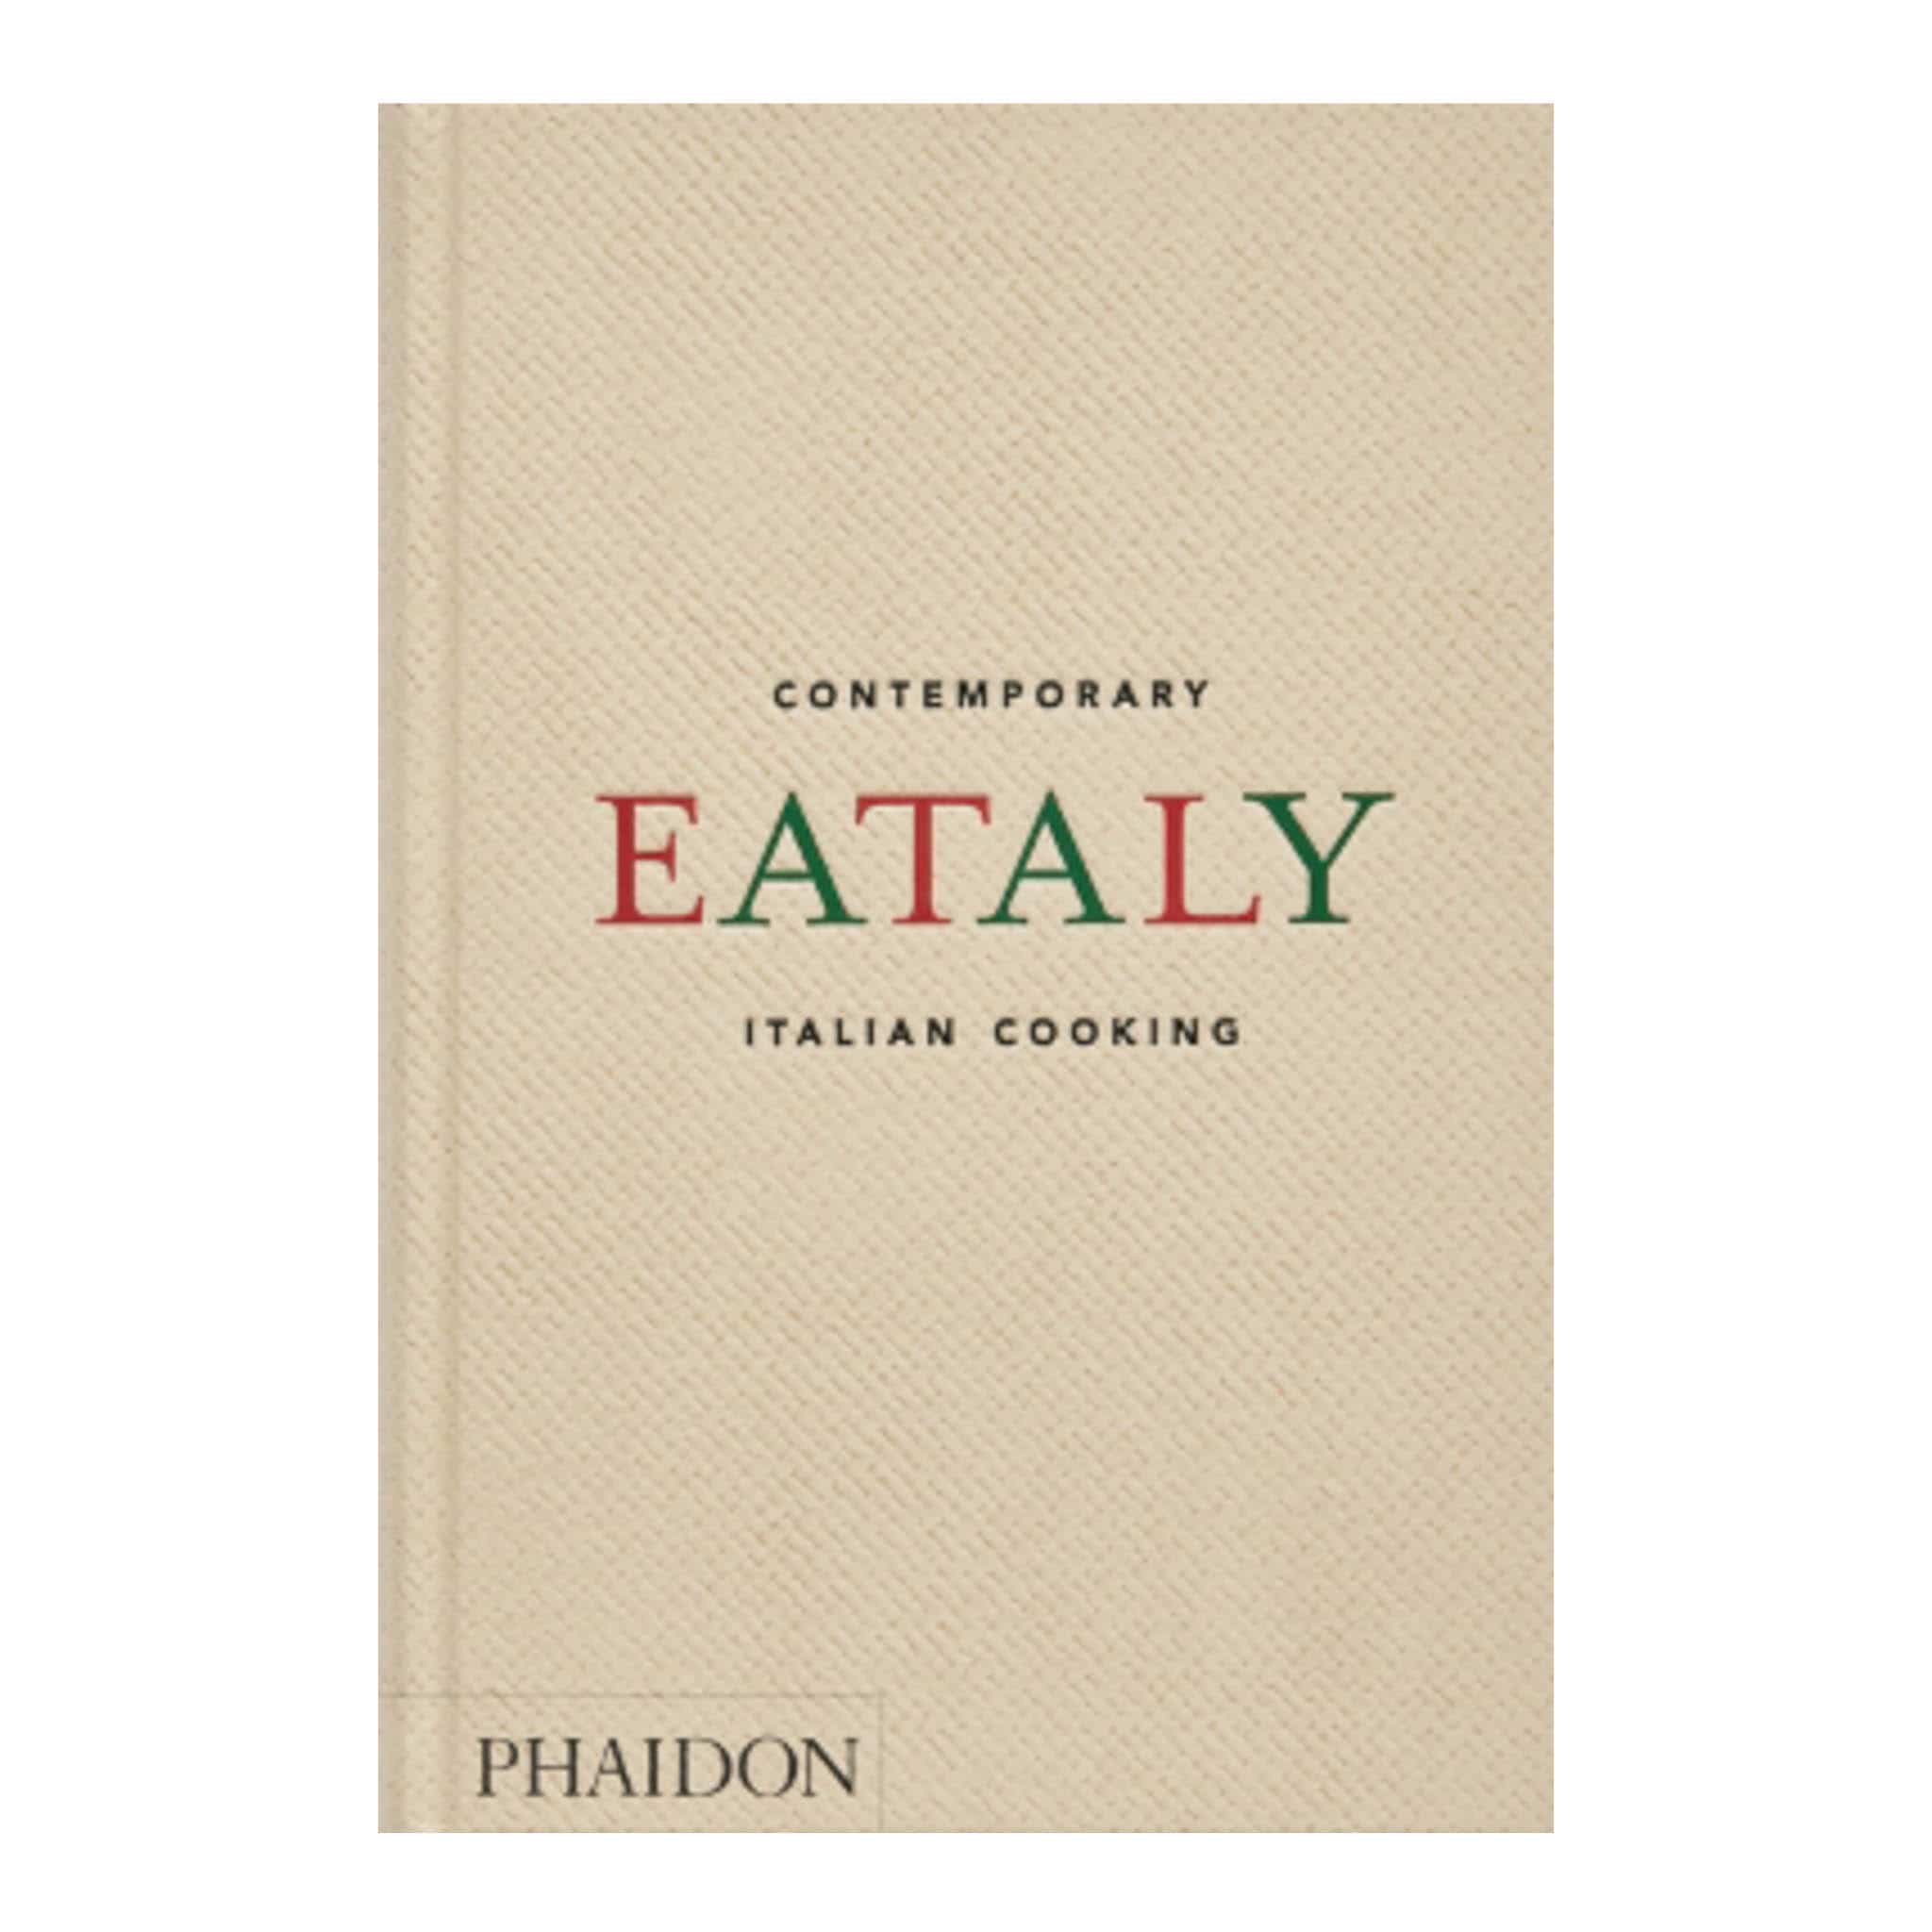 Eataly, Contemporary Italian Cooking, by Oscar Farinetti